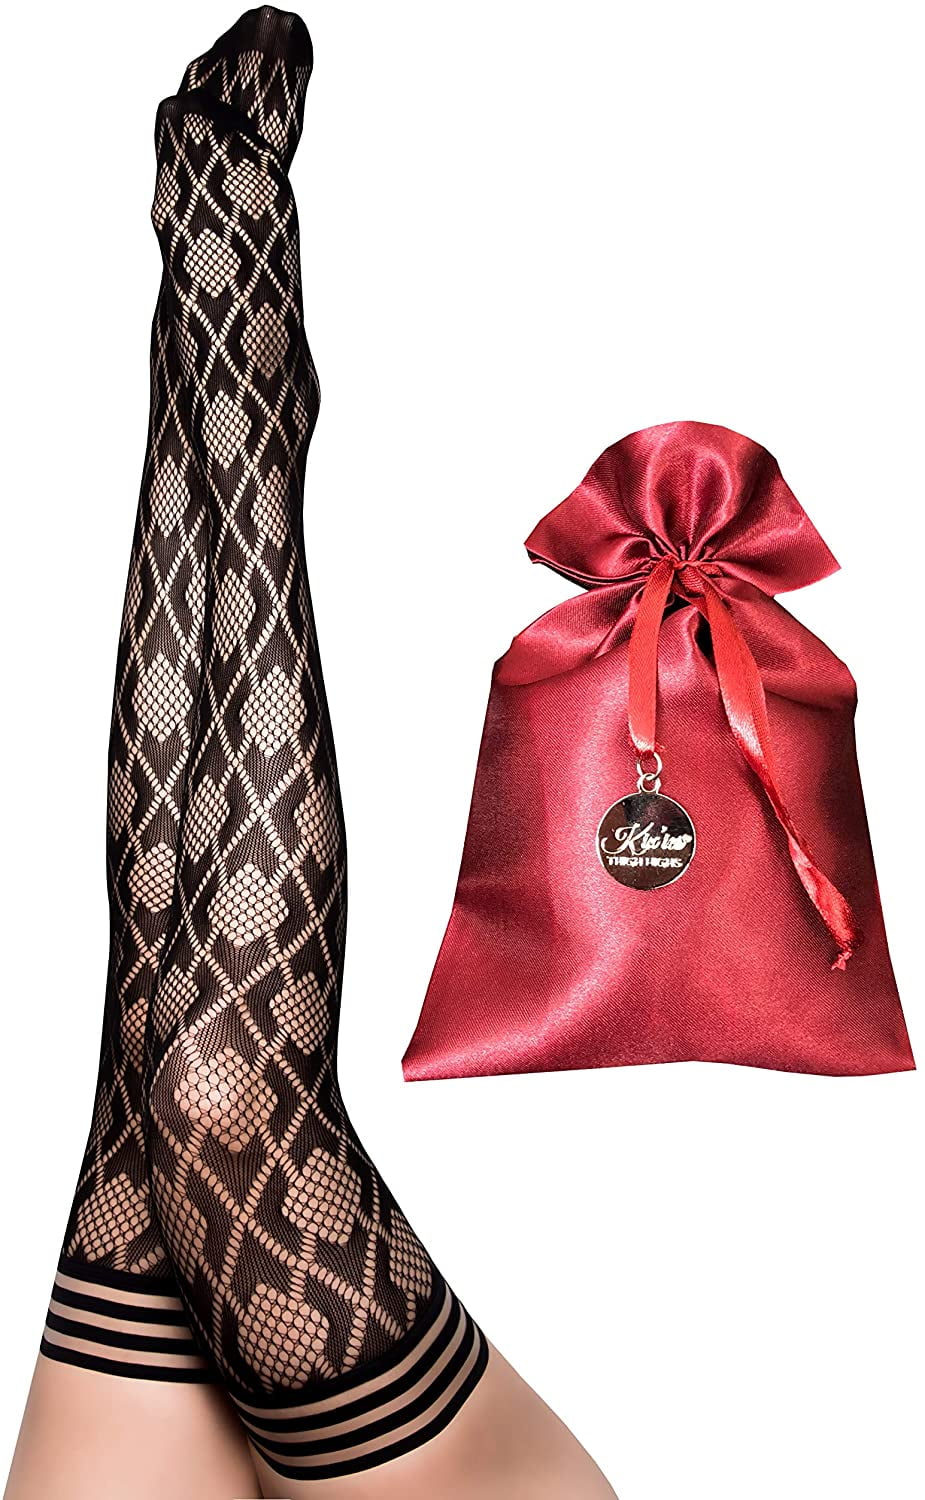 Thigh high diamond exotic stockings for women accessories for women stockings for dancers